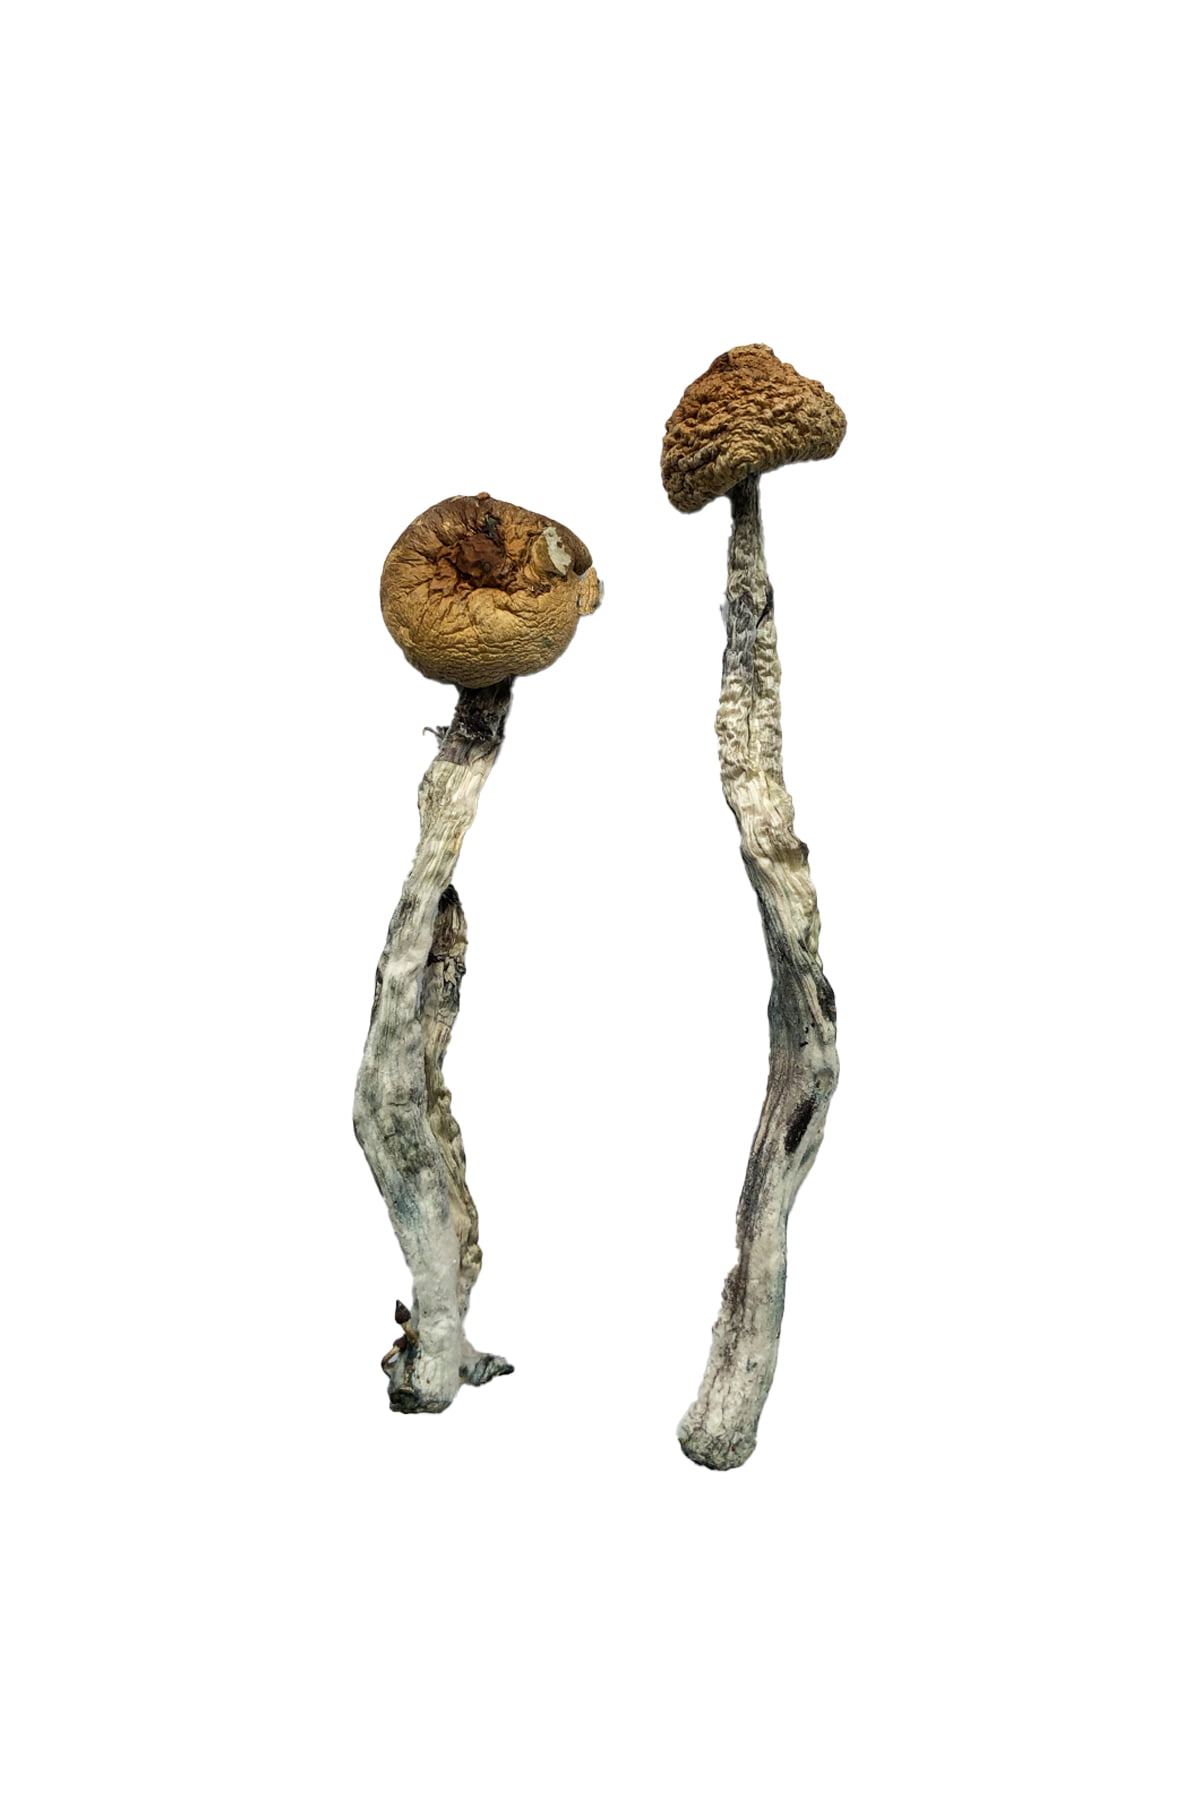 Z-Strain Cubensis Mushrooms